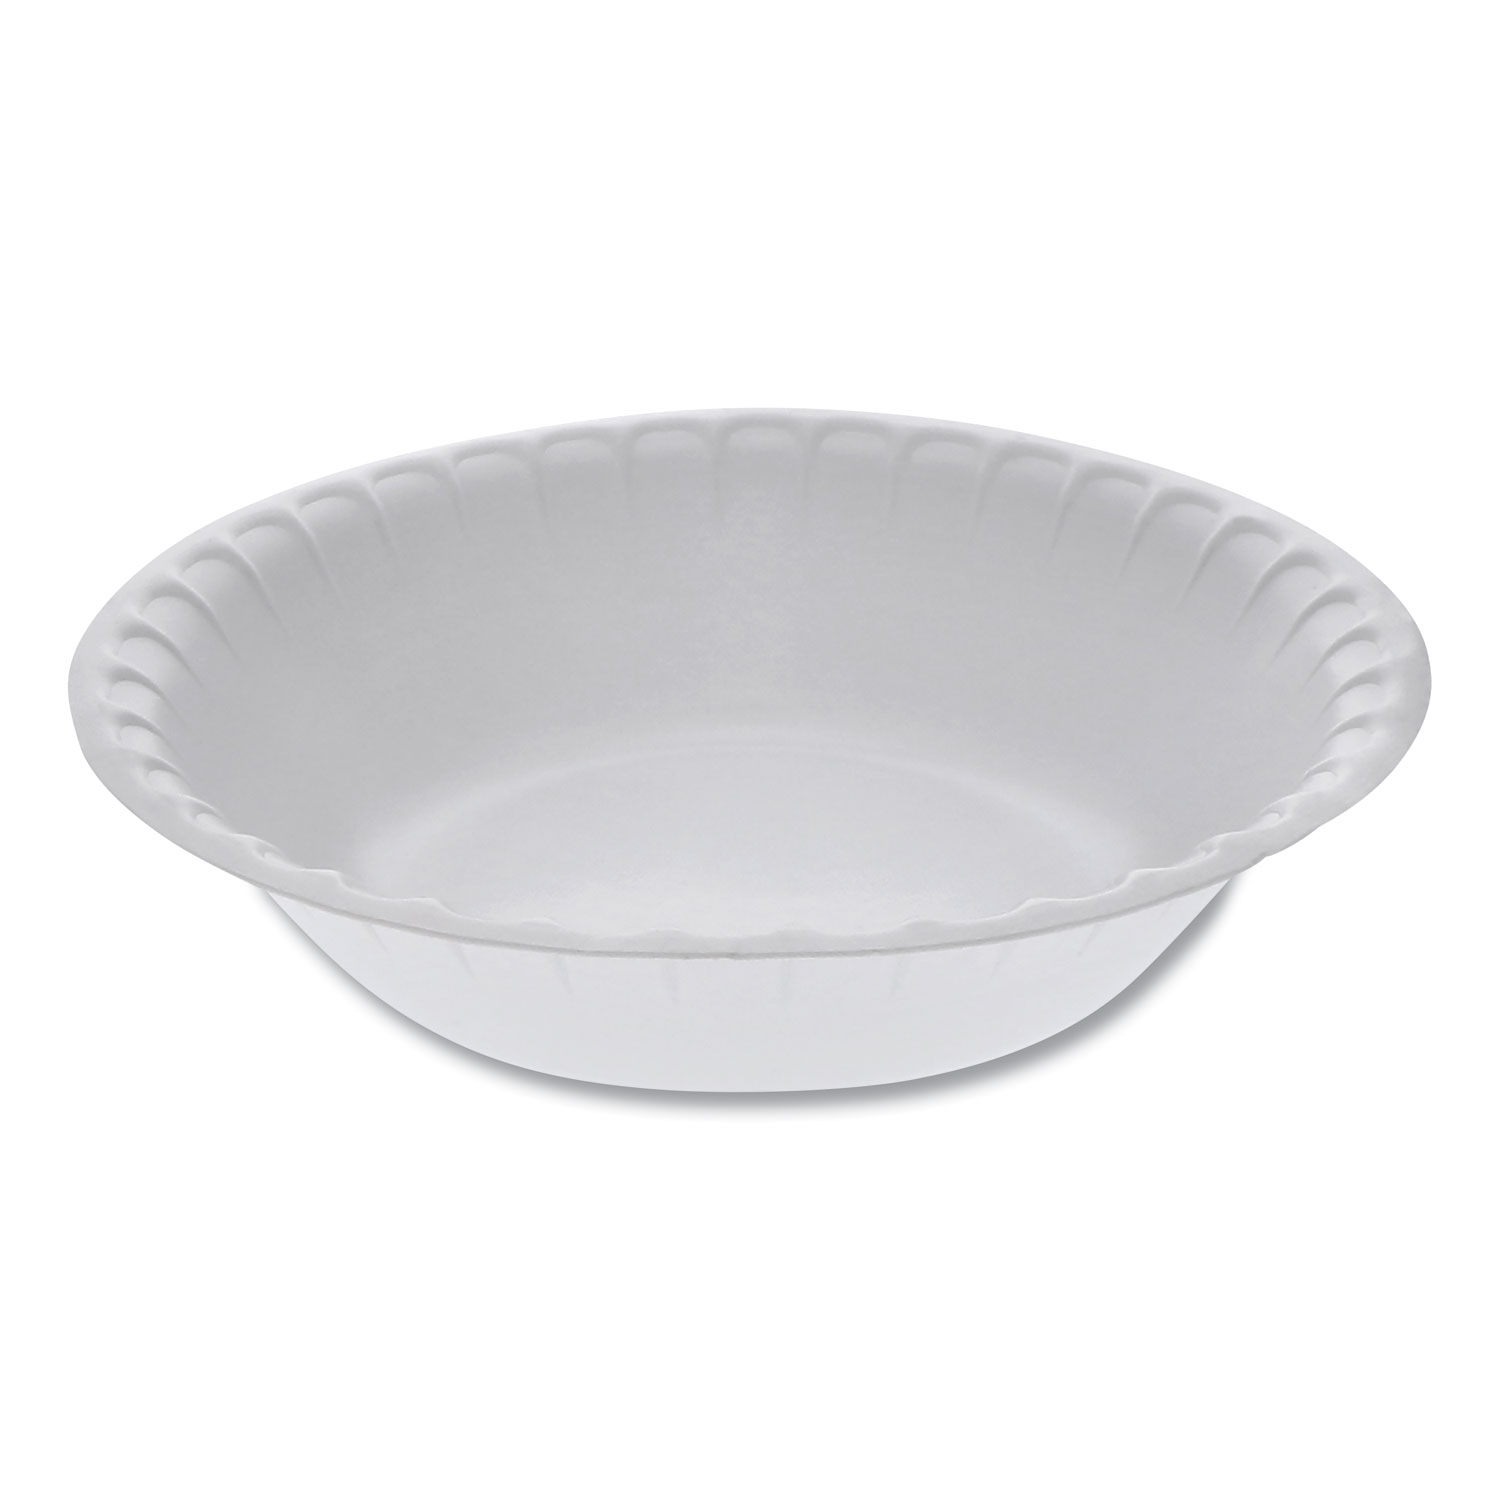  Pactiv YTH100300000 Unlaminated Foam Dinnerware, Bowl, 30 oz, 6 Diameter, White, 450/Carton (PCTYTH10030) 